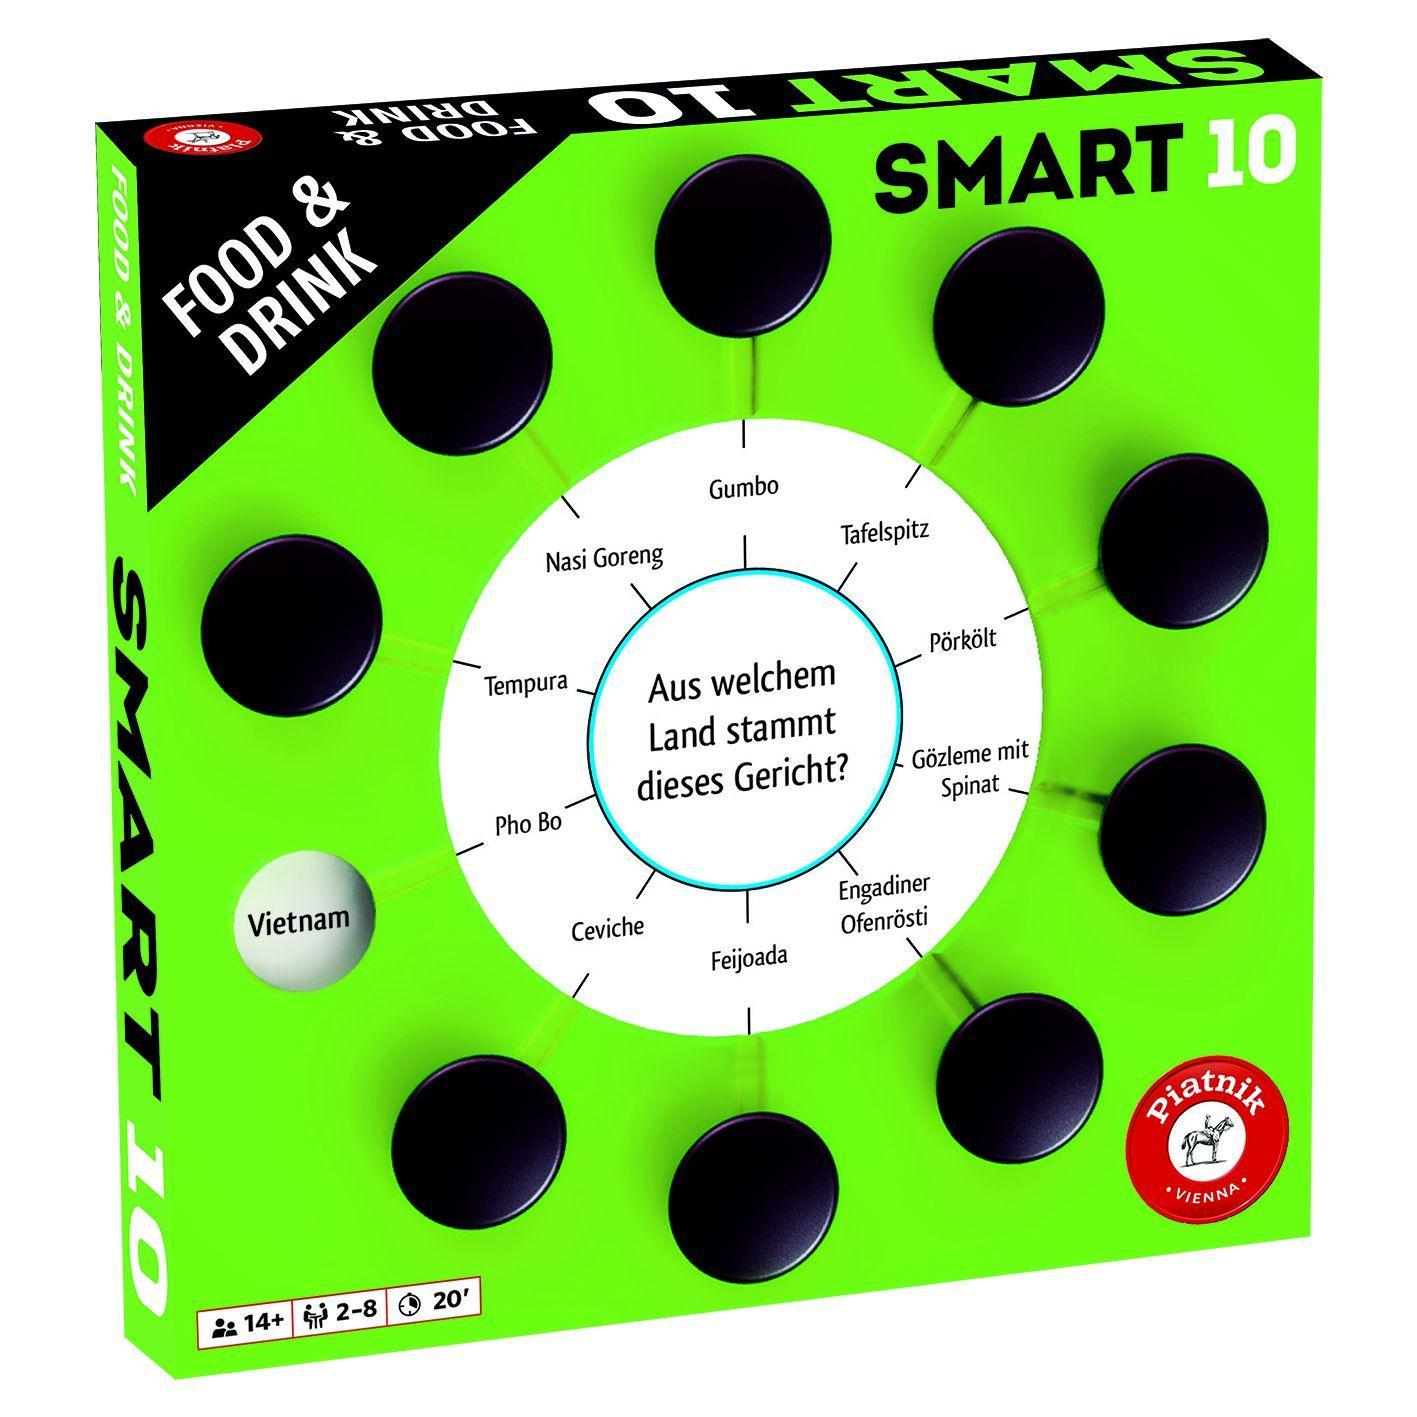 Igra/Igračka Smart 10 Erweiterung 1 - Food & Drink 